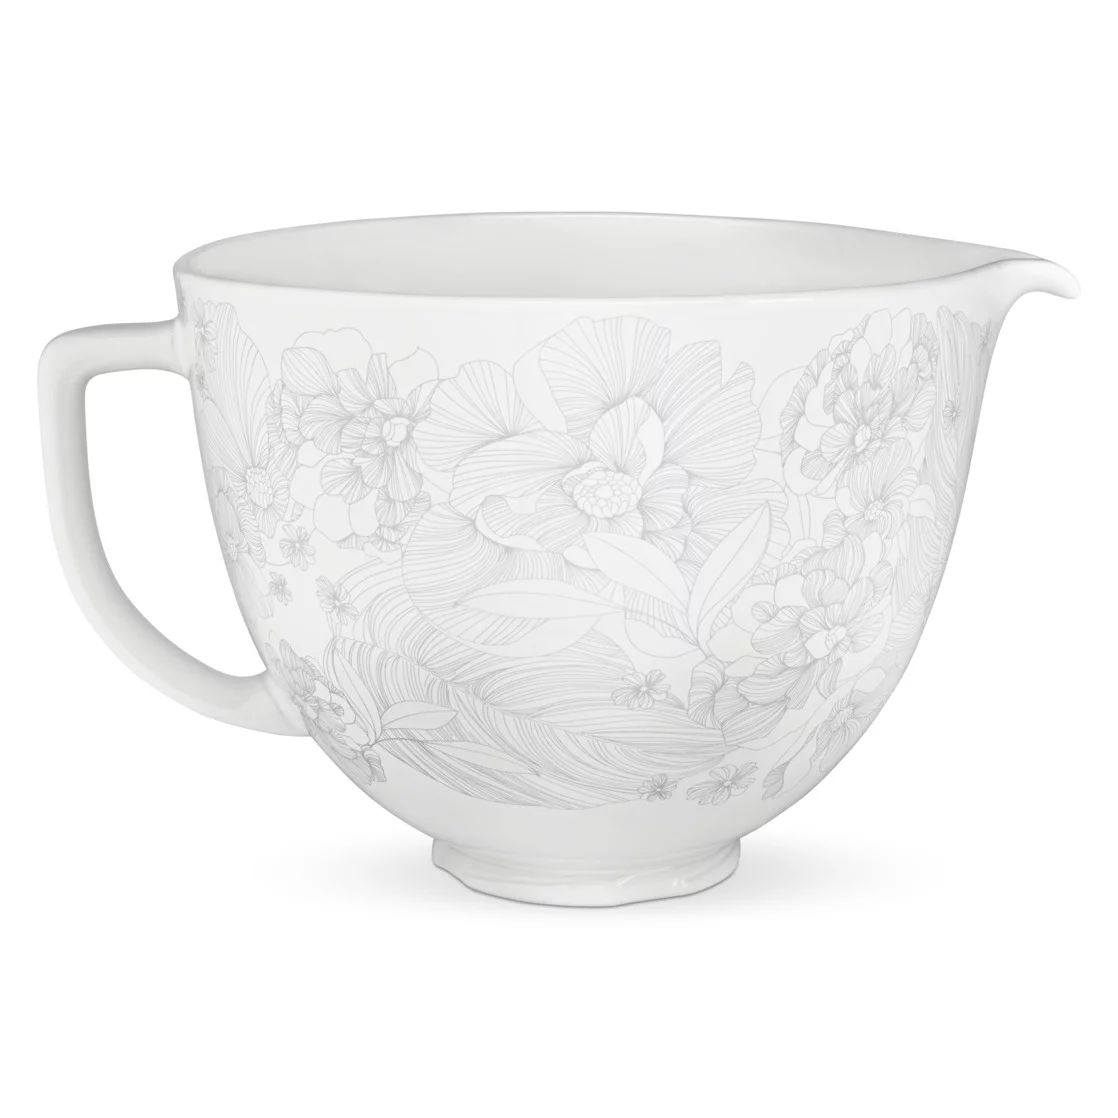 KitchenAid 5 Quart Whispering Floral Ceramic Bowl - KSM2CB5P | Walmart (US)